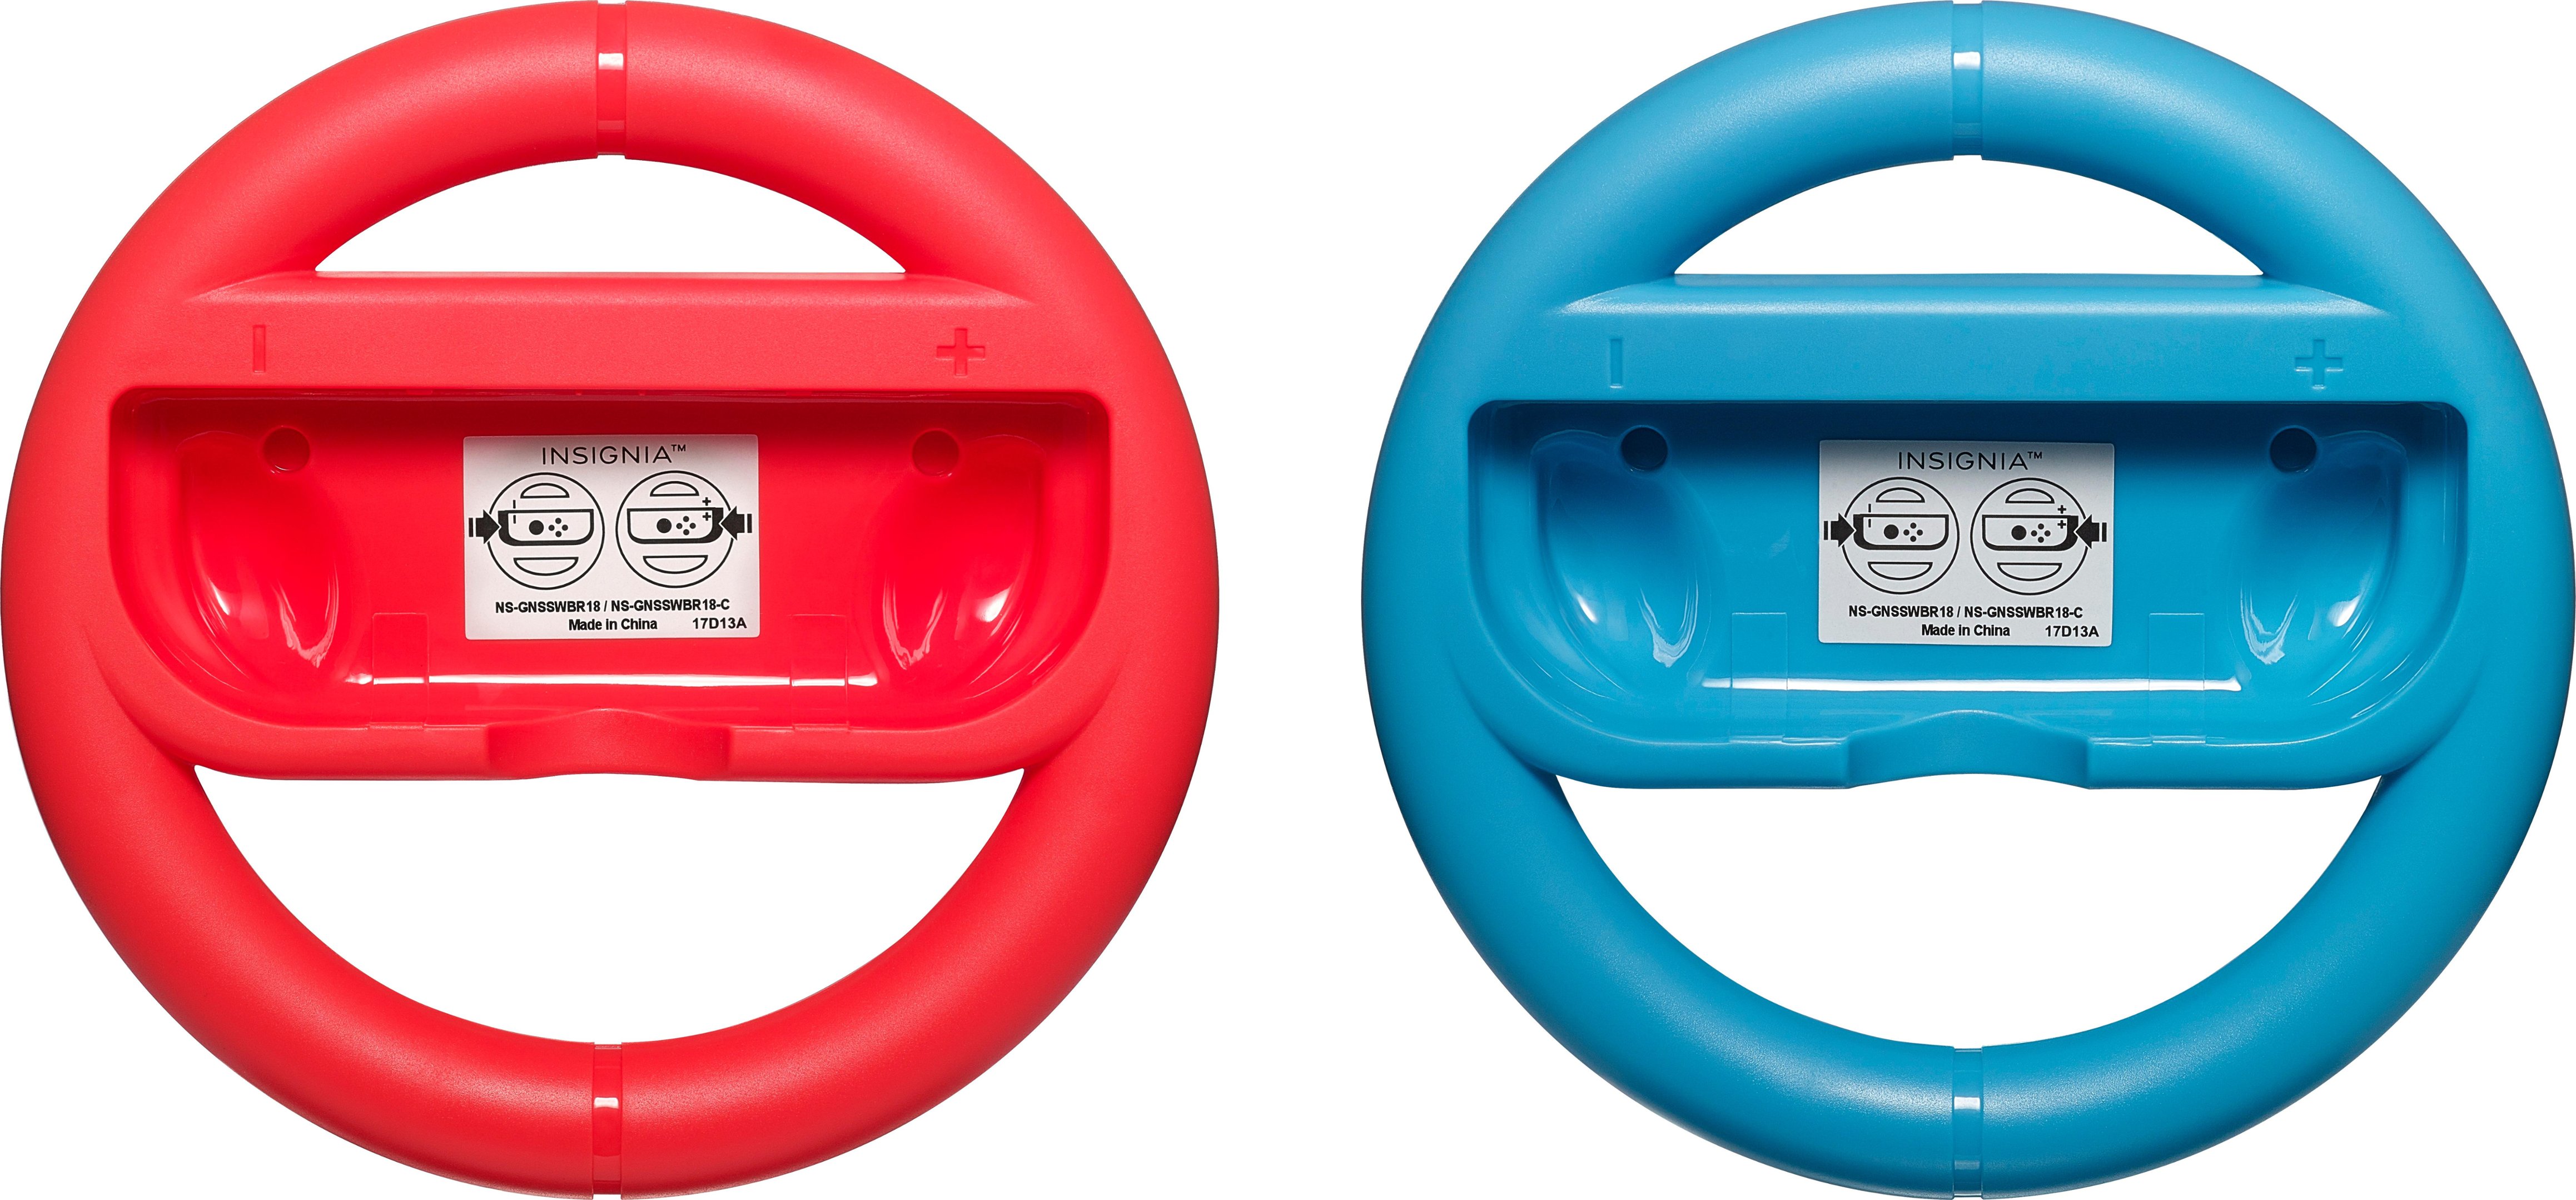 (2-Pack) Neon Buy: Nintendo Insignia™ Best Switch NS-GNSSWBR18 Joy-Con red/Neon Wheel Blue for